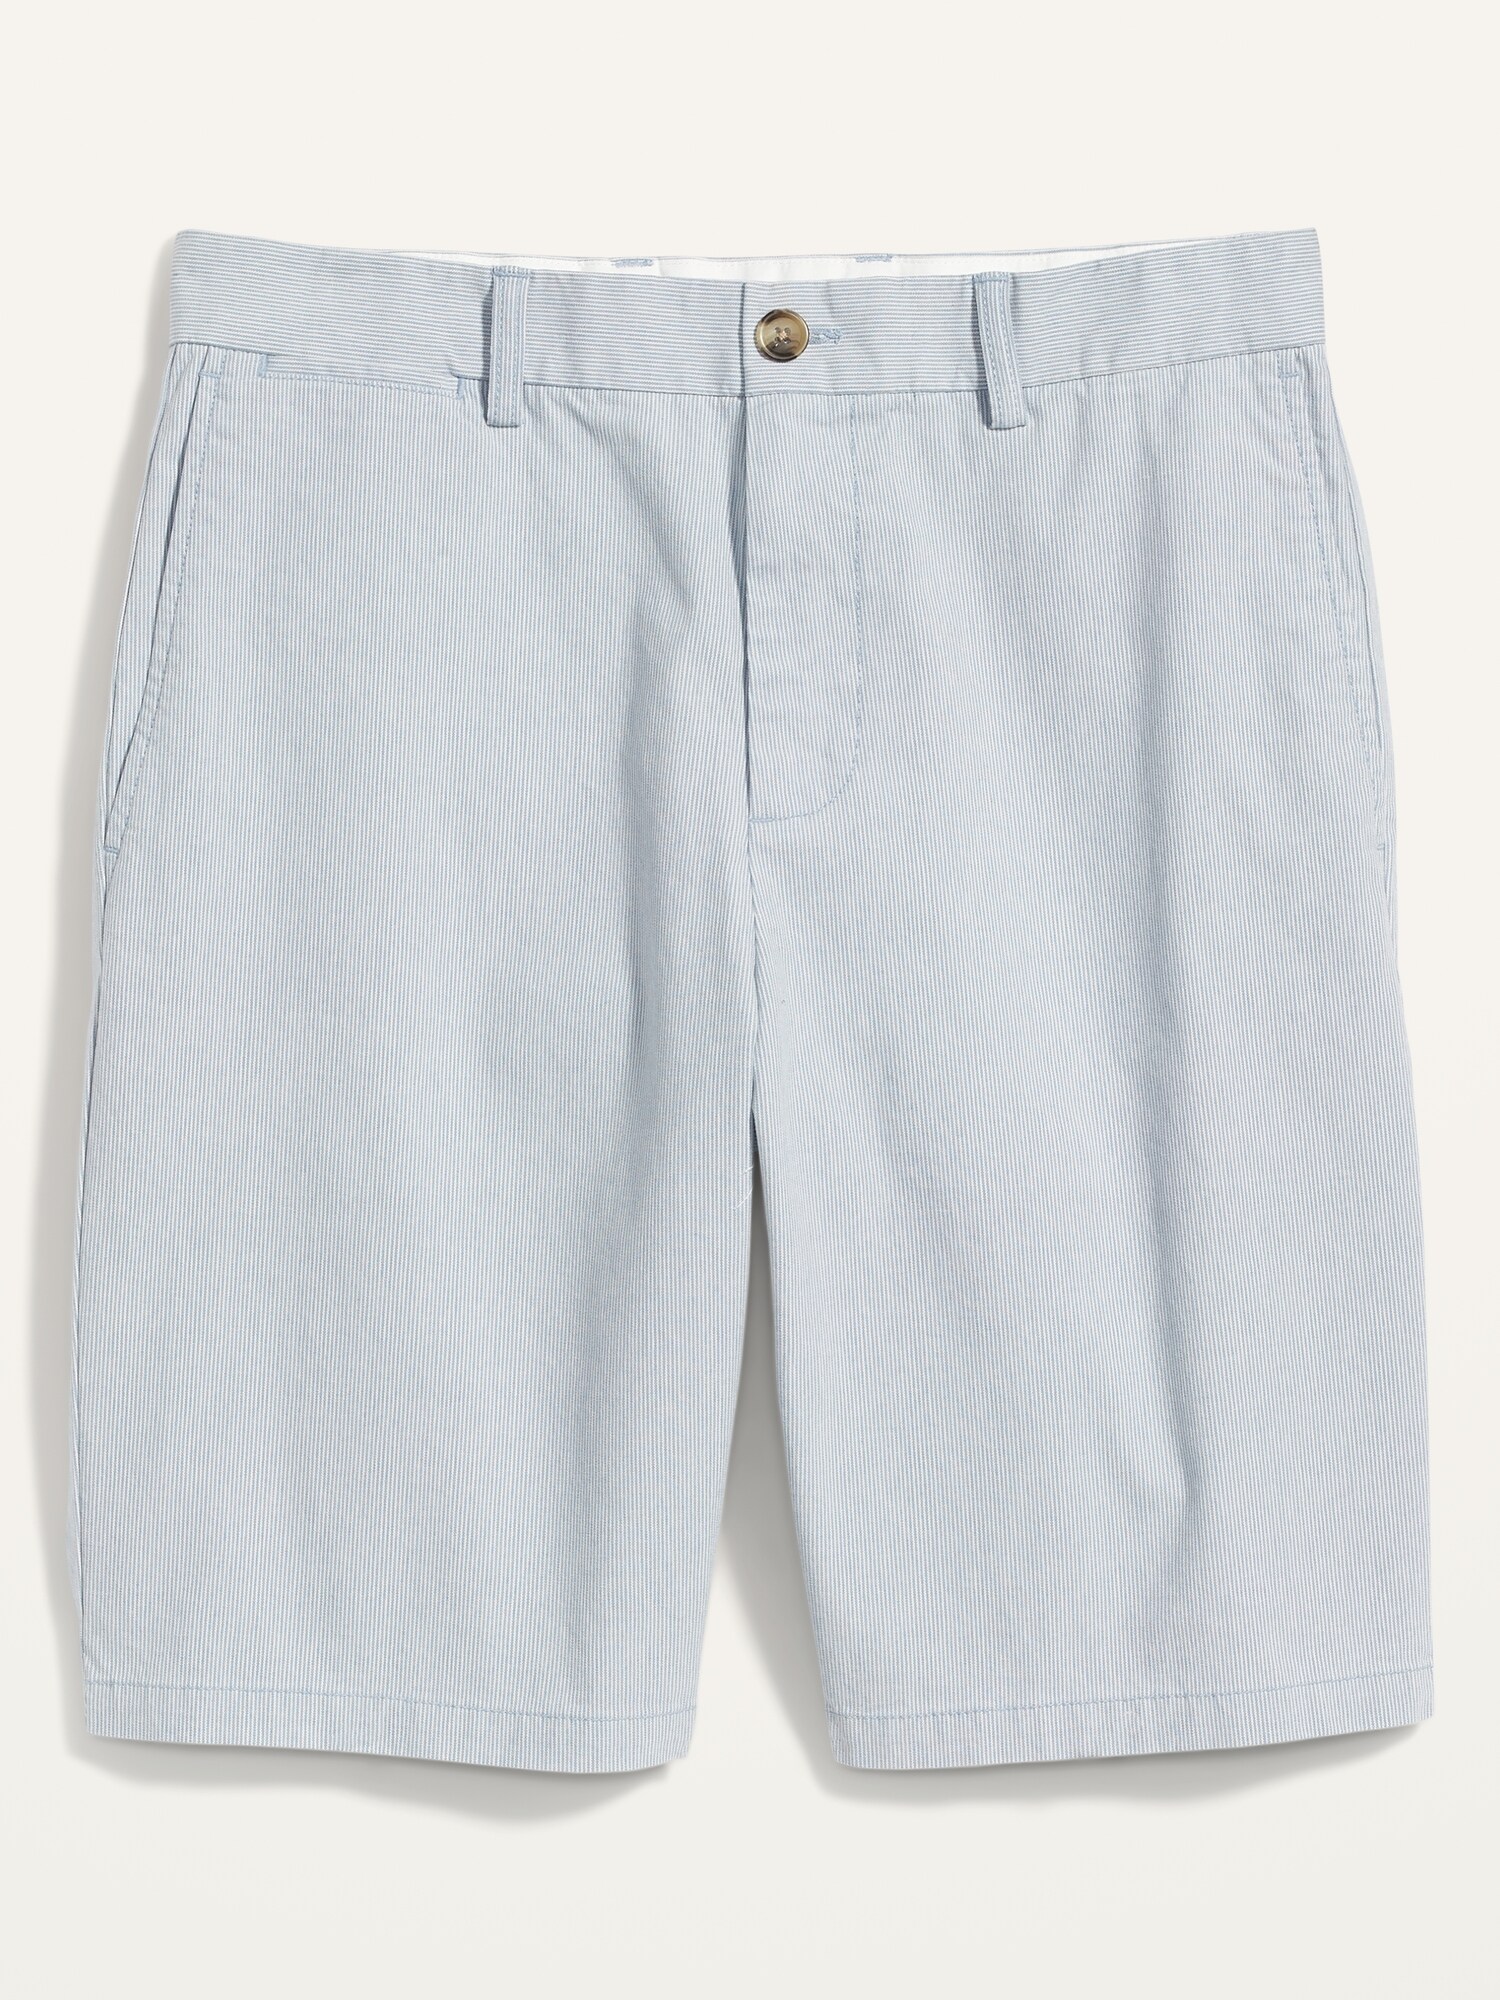 Slim Ultimate Shorts for Men - 10-inch inseam | Old Navy